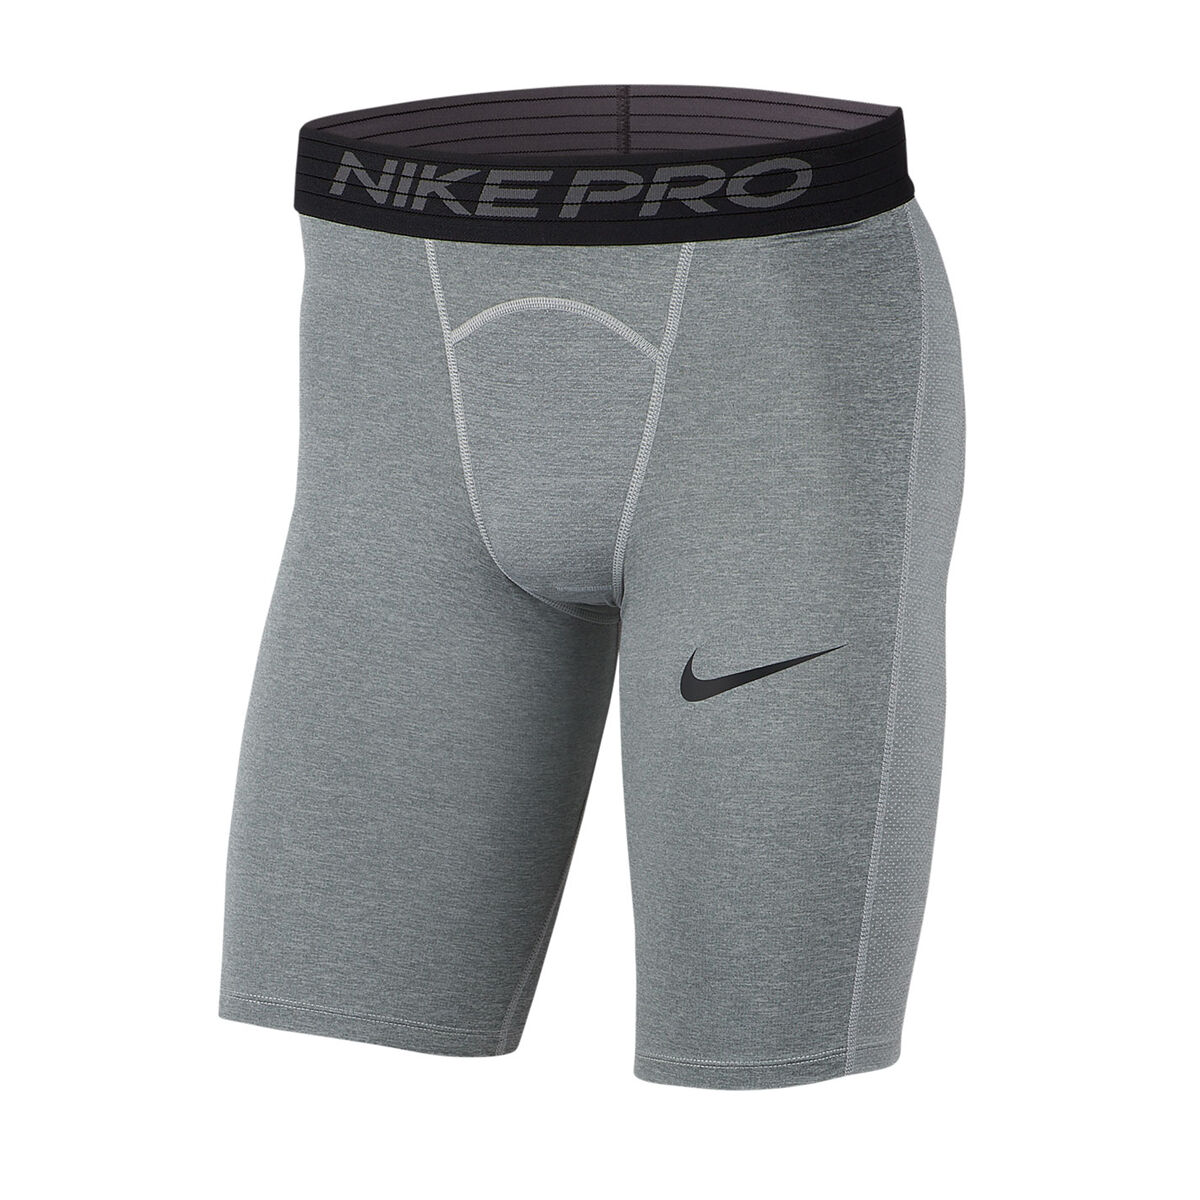 Nike Men's Compression Gear | Shorts 